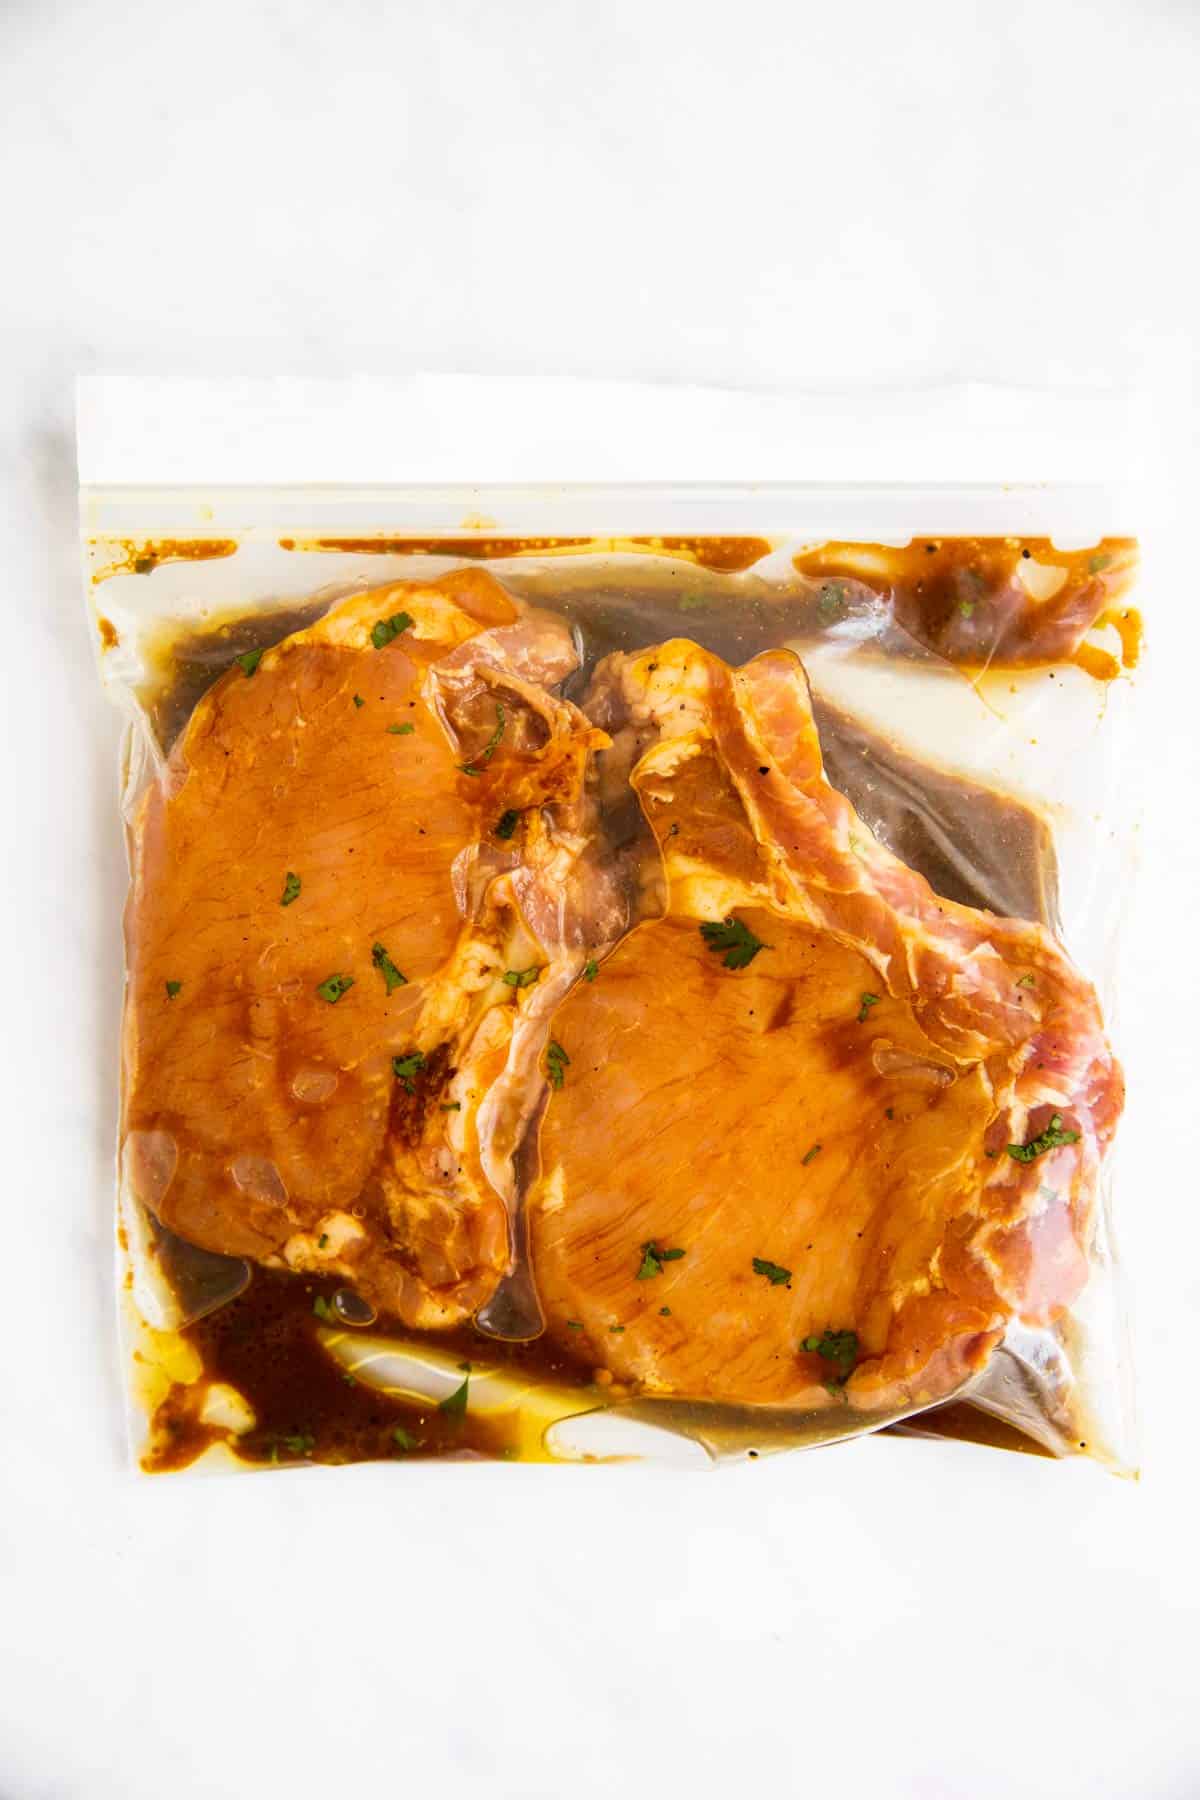 ziploc bag with marinated pork chops